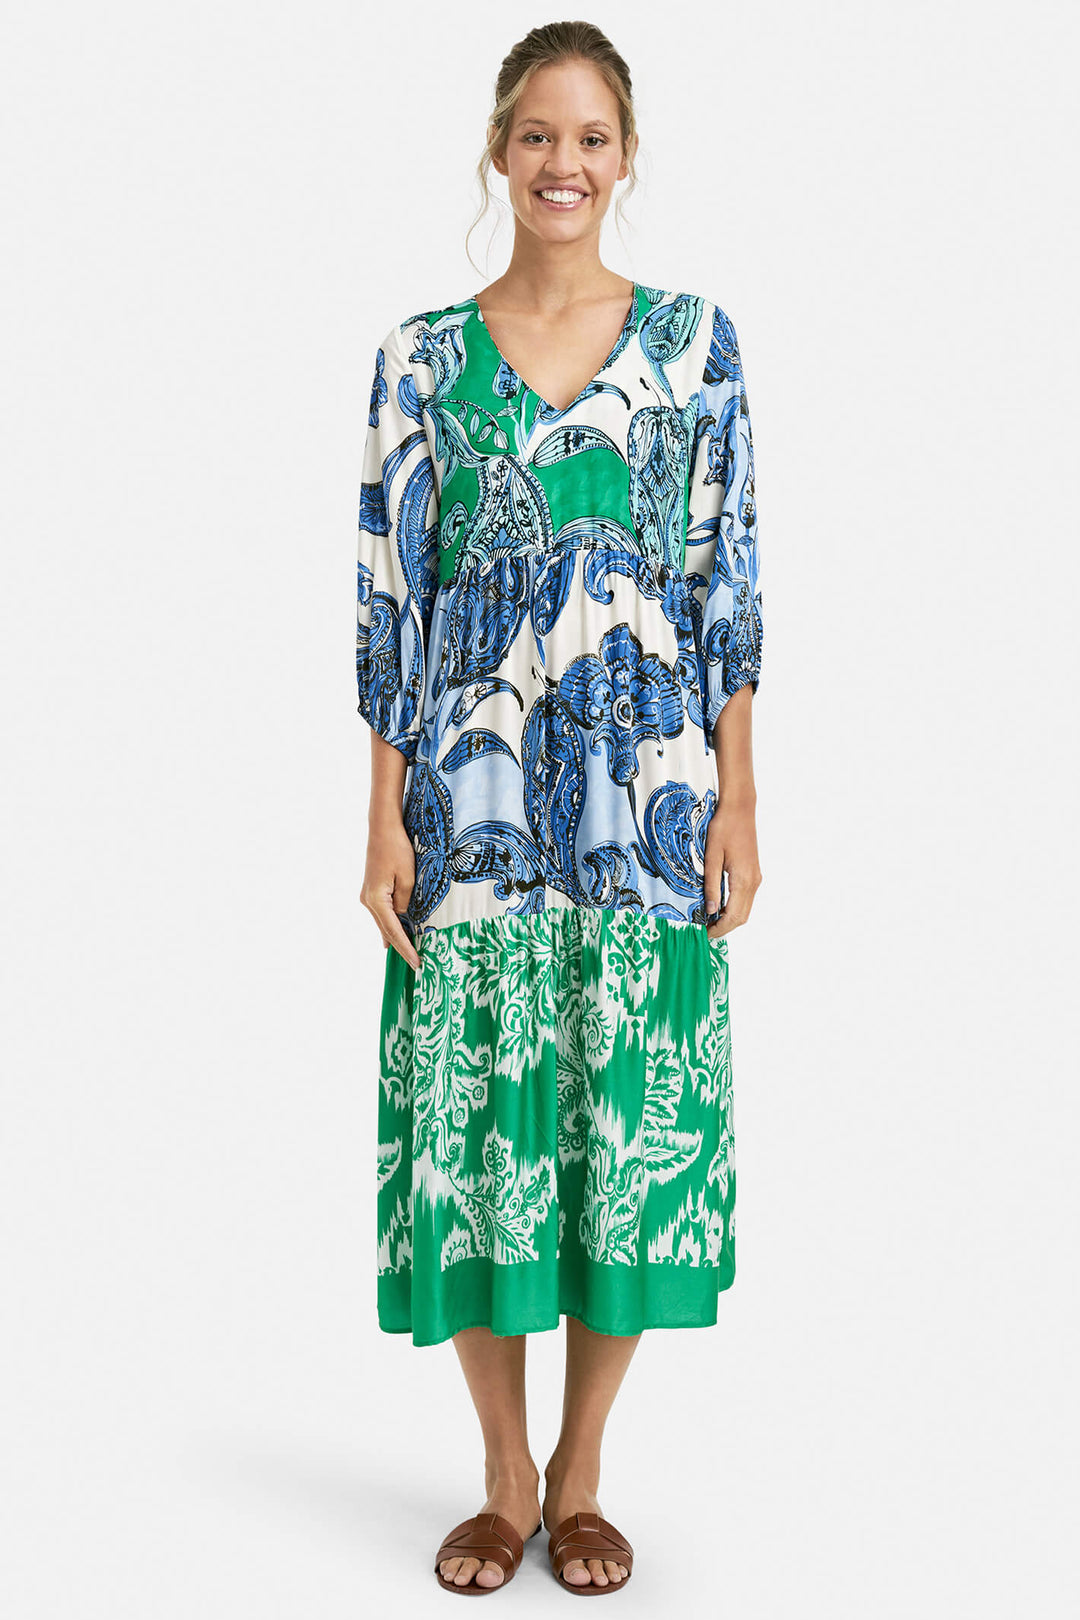 Milano 6028 Denim Blue Green Print Dress - Experience Boutique